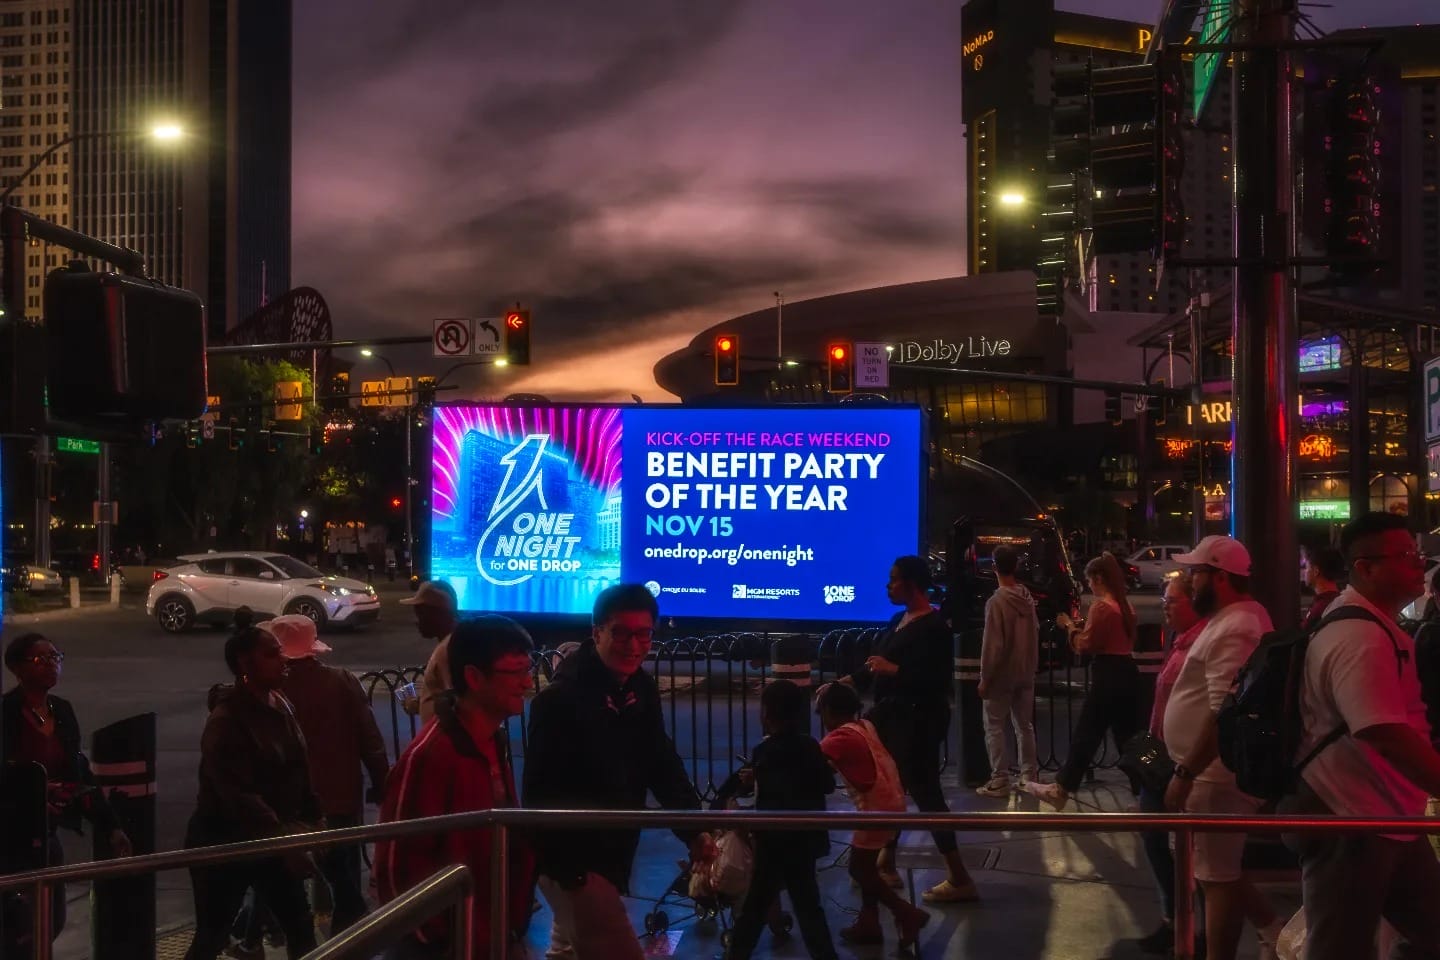 Crowd at dusk near illuminated event billboard.